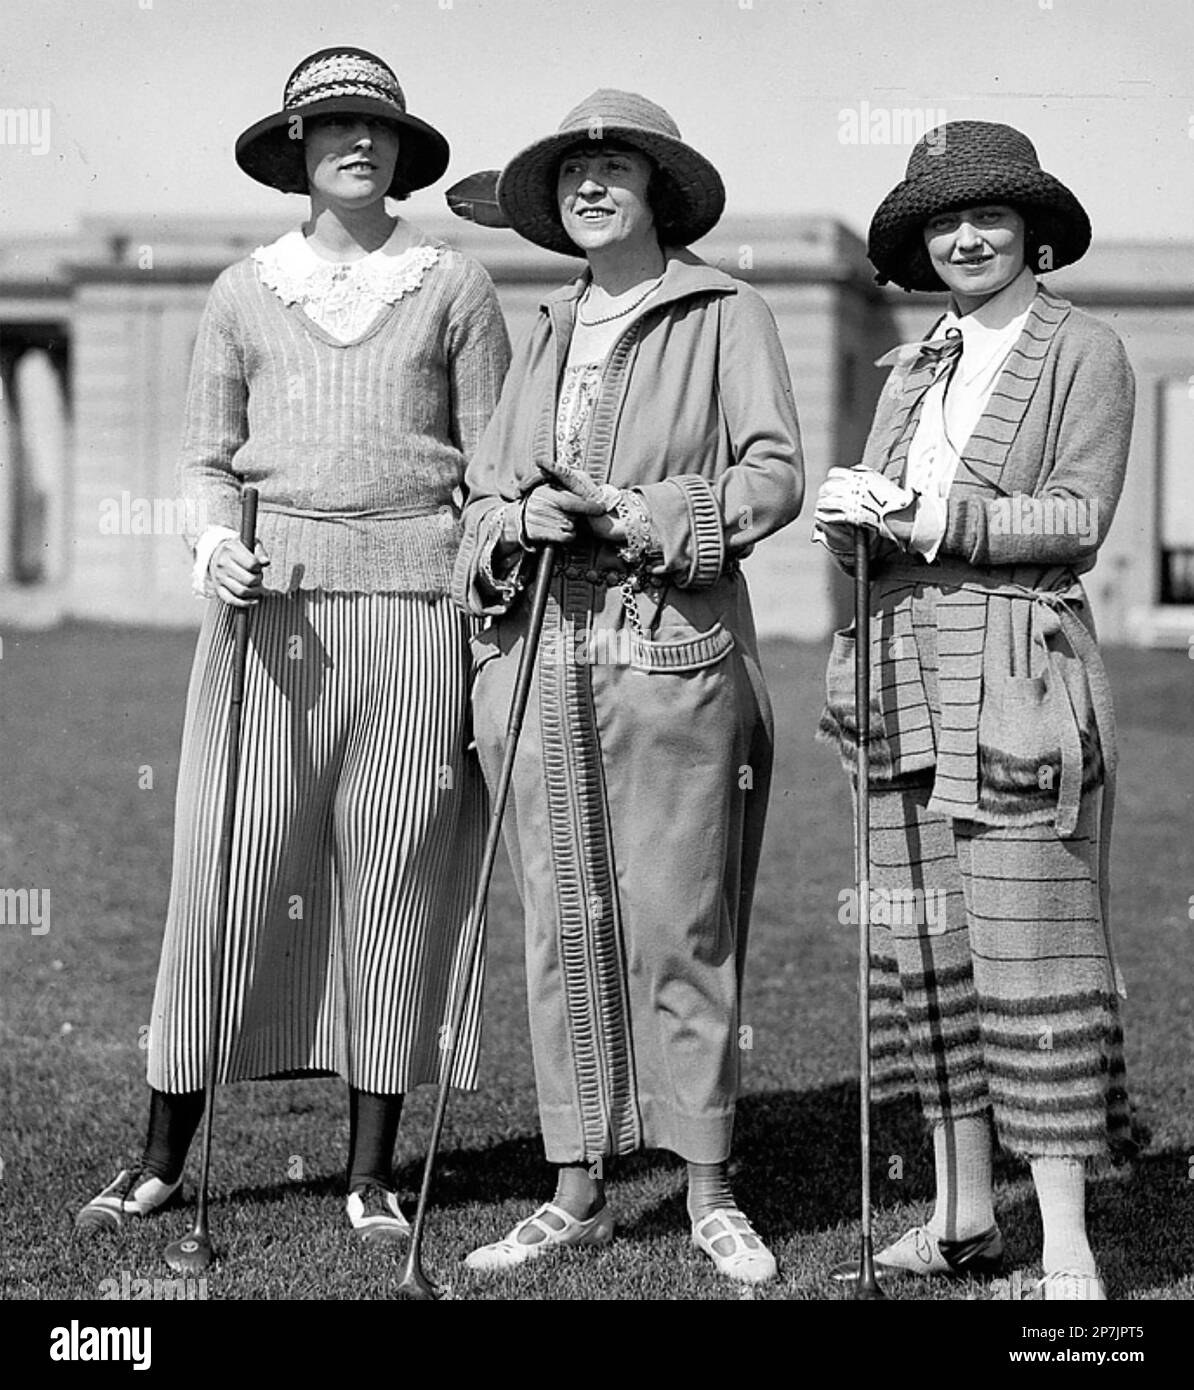 AMERICAN WOMEN GOLFERS about 1925 Stock Photo